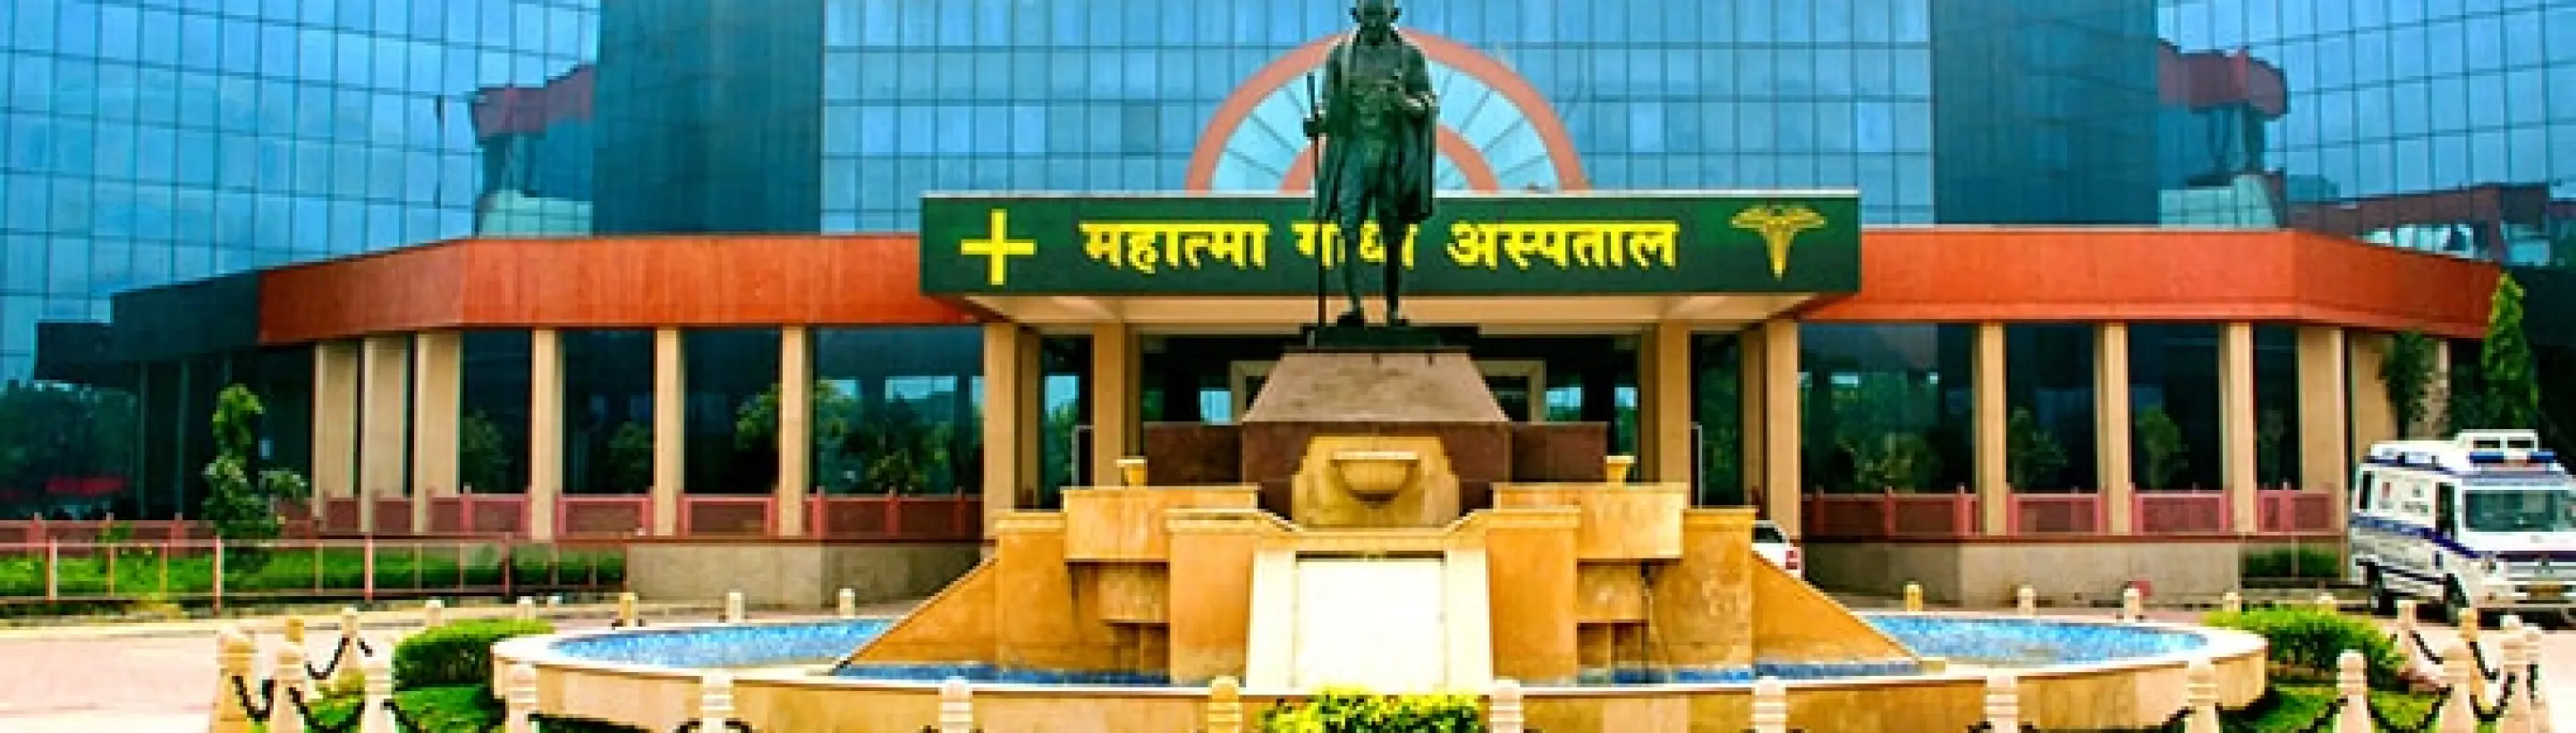 Mahatma Gandhi University of Medical Sciences & Technology